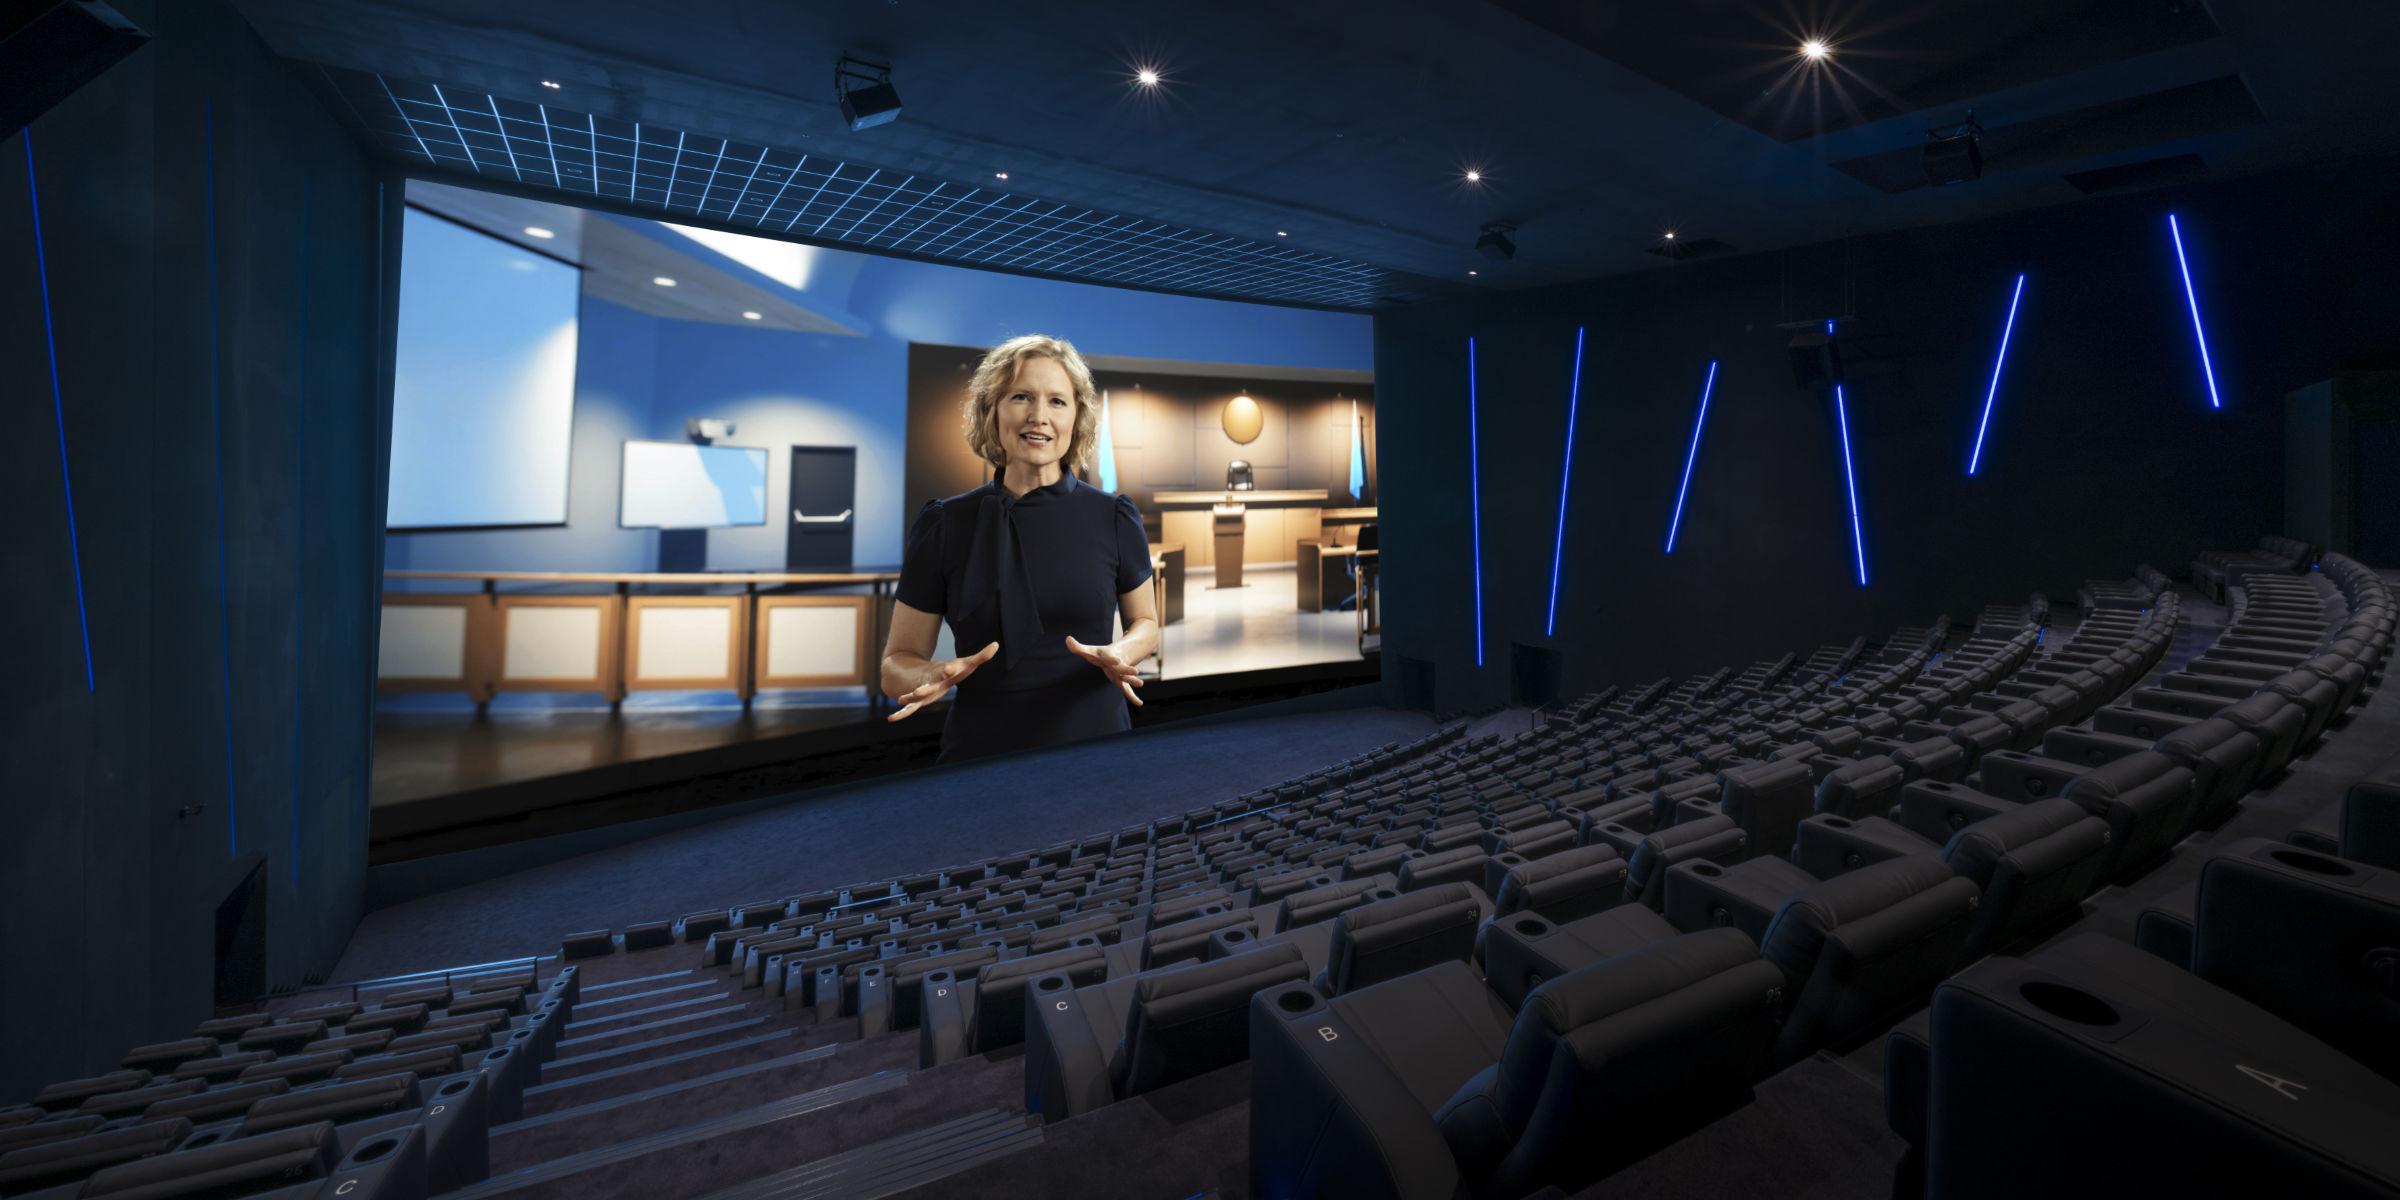 IMAX Cinema Experience